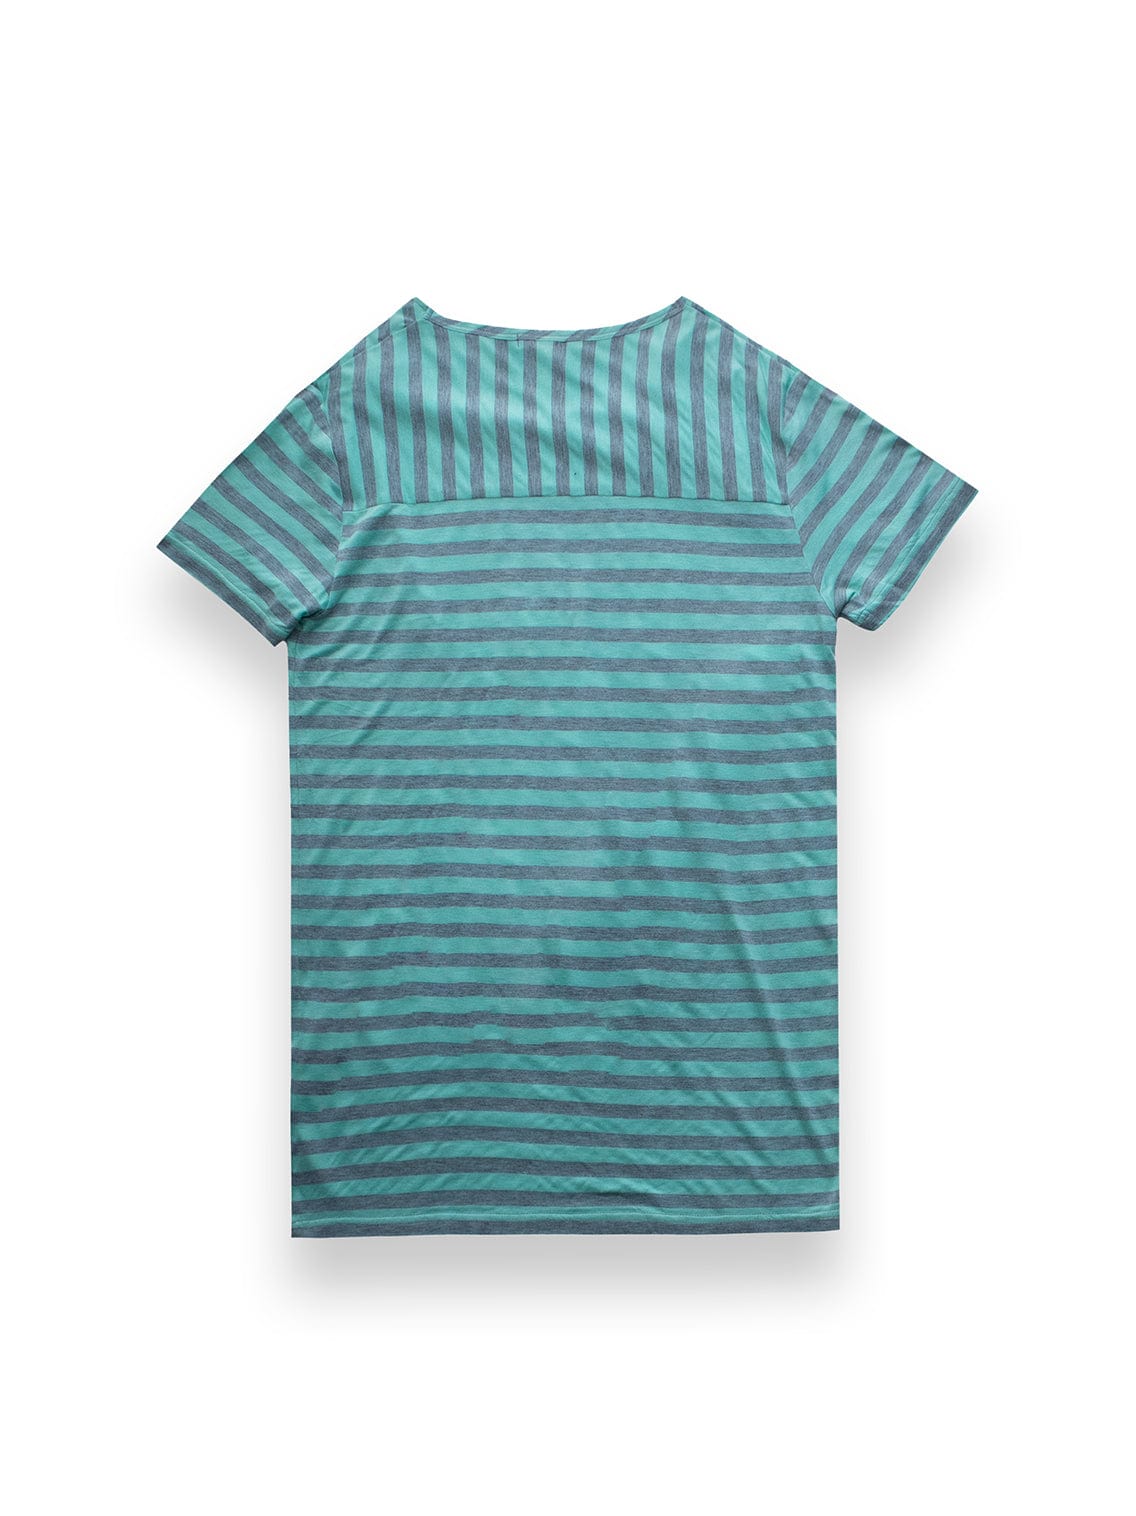 Aqua Coloured T-Shirt With Grey Striped Details